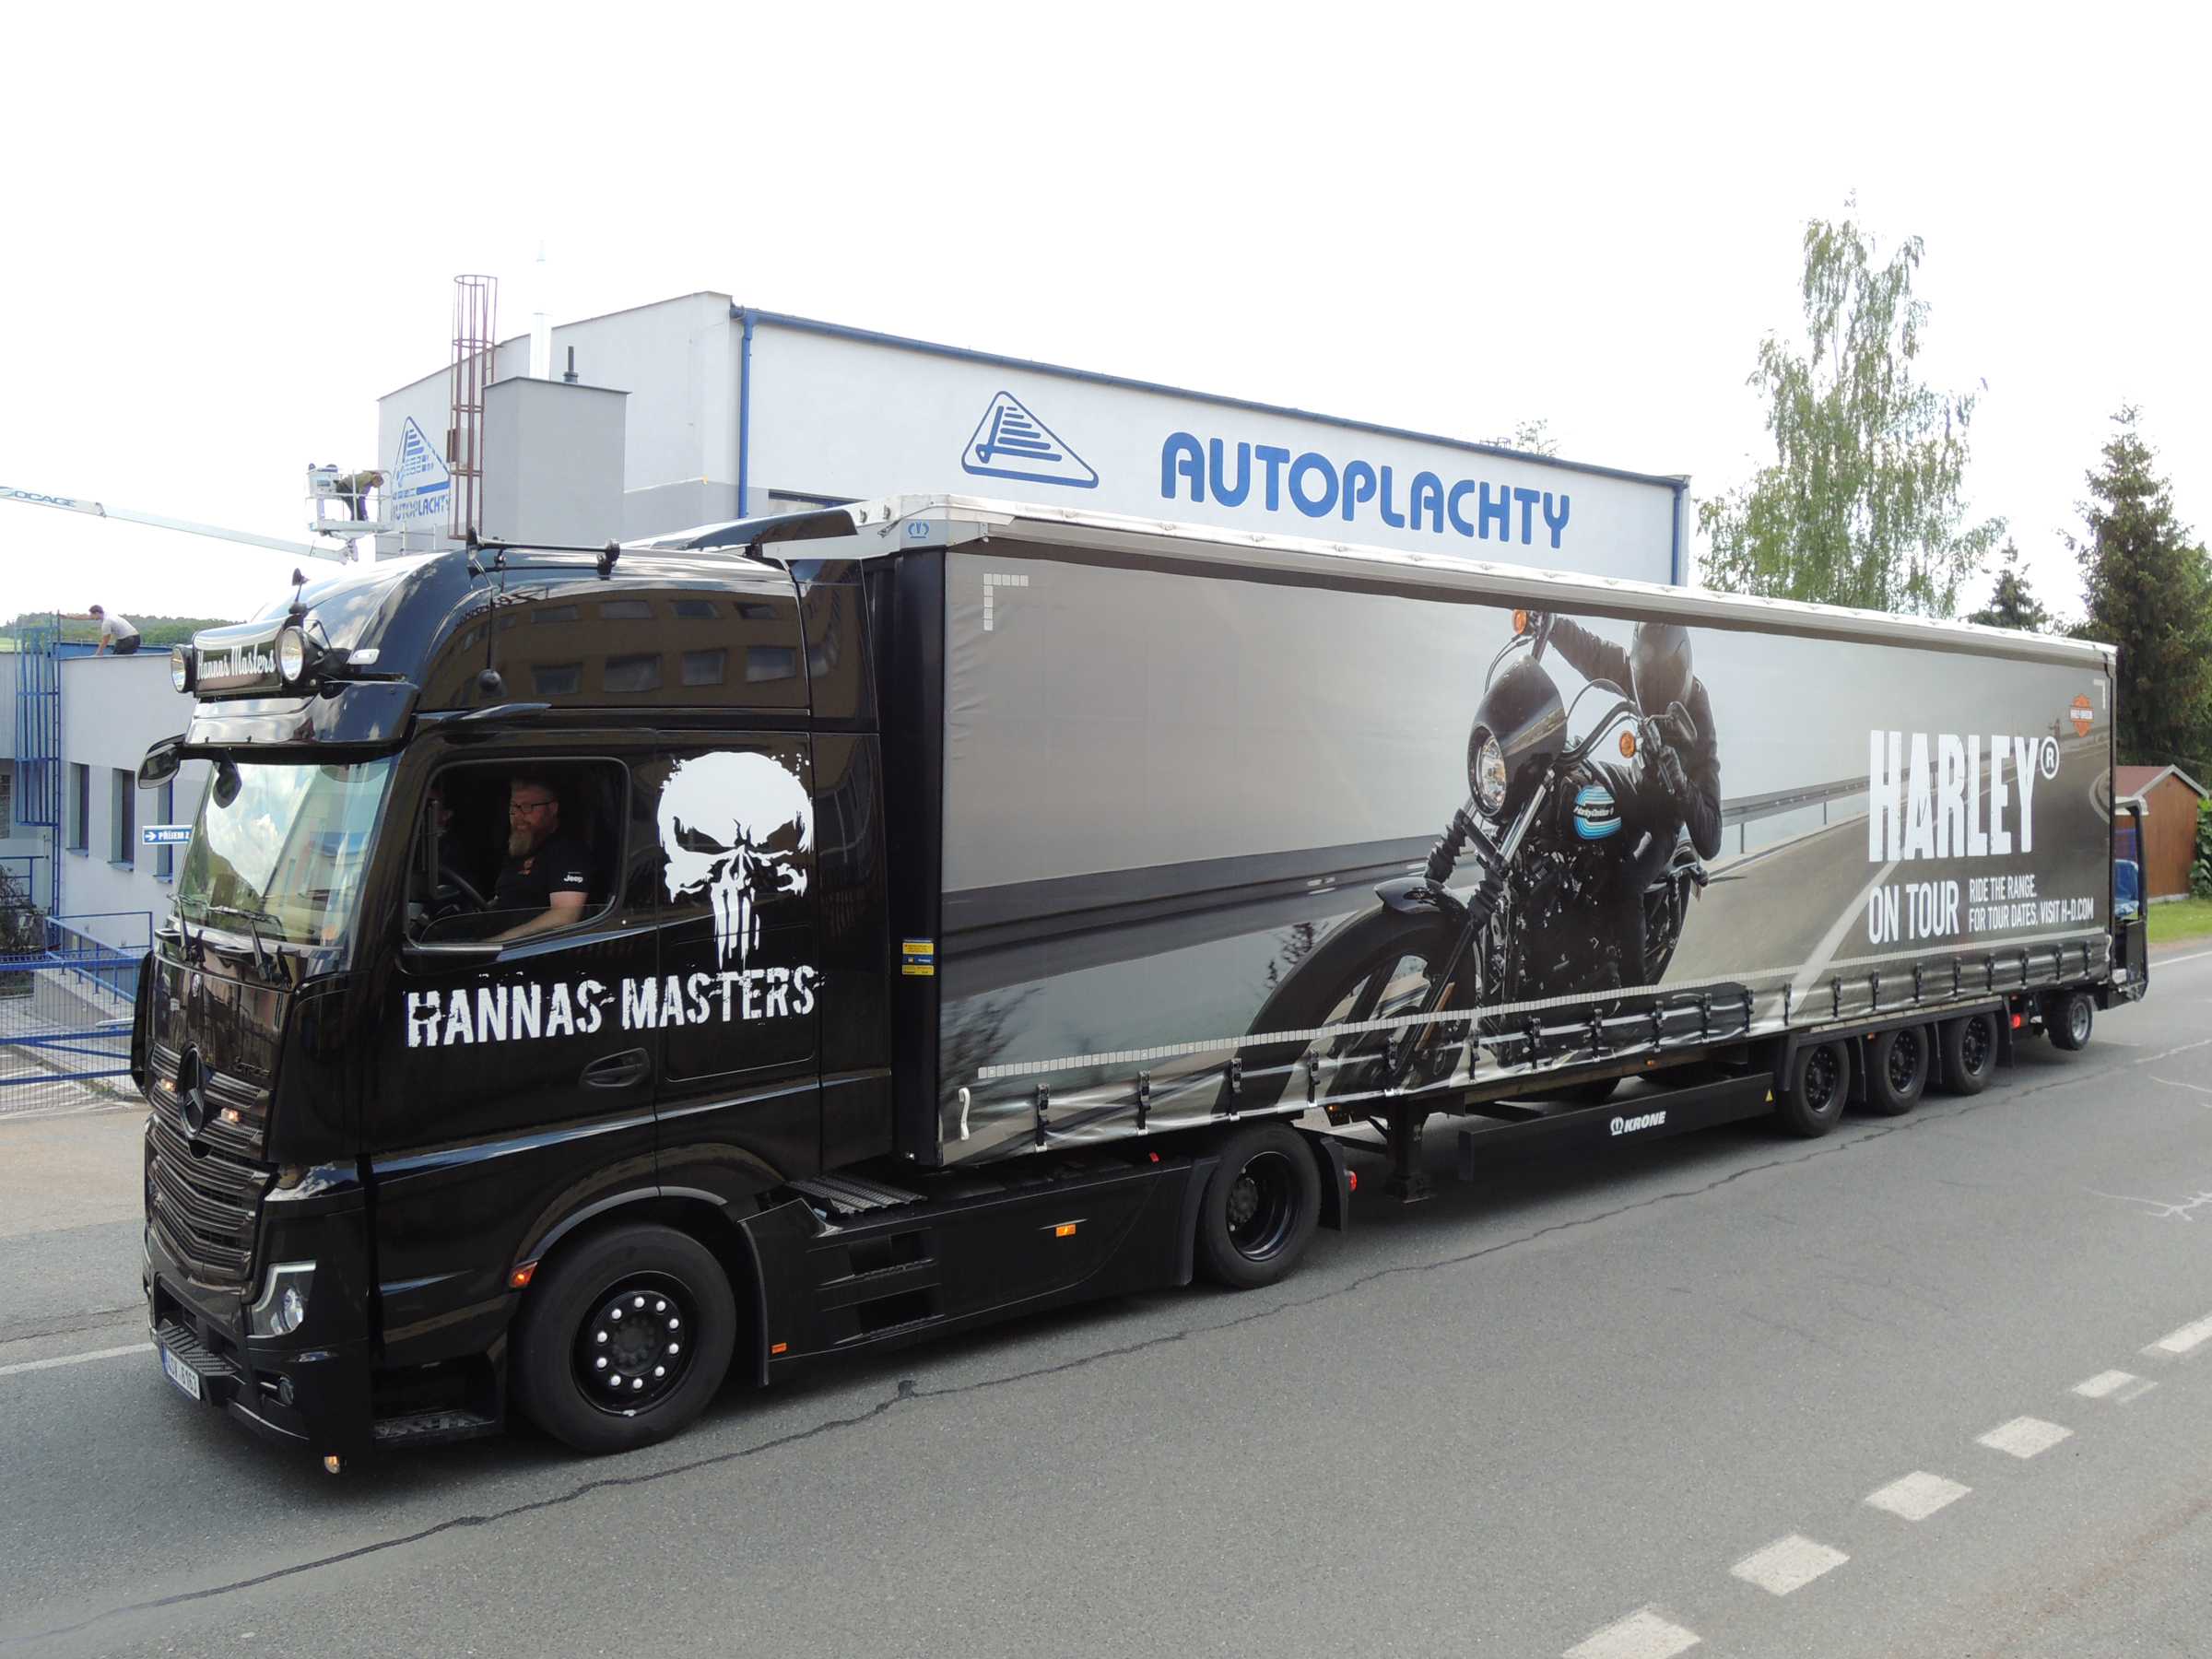 Harley on Tour 2020 truck napakowany motocyklami